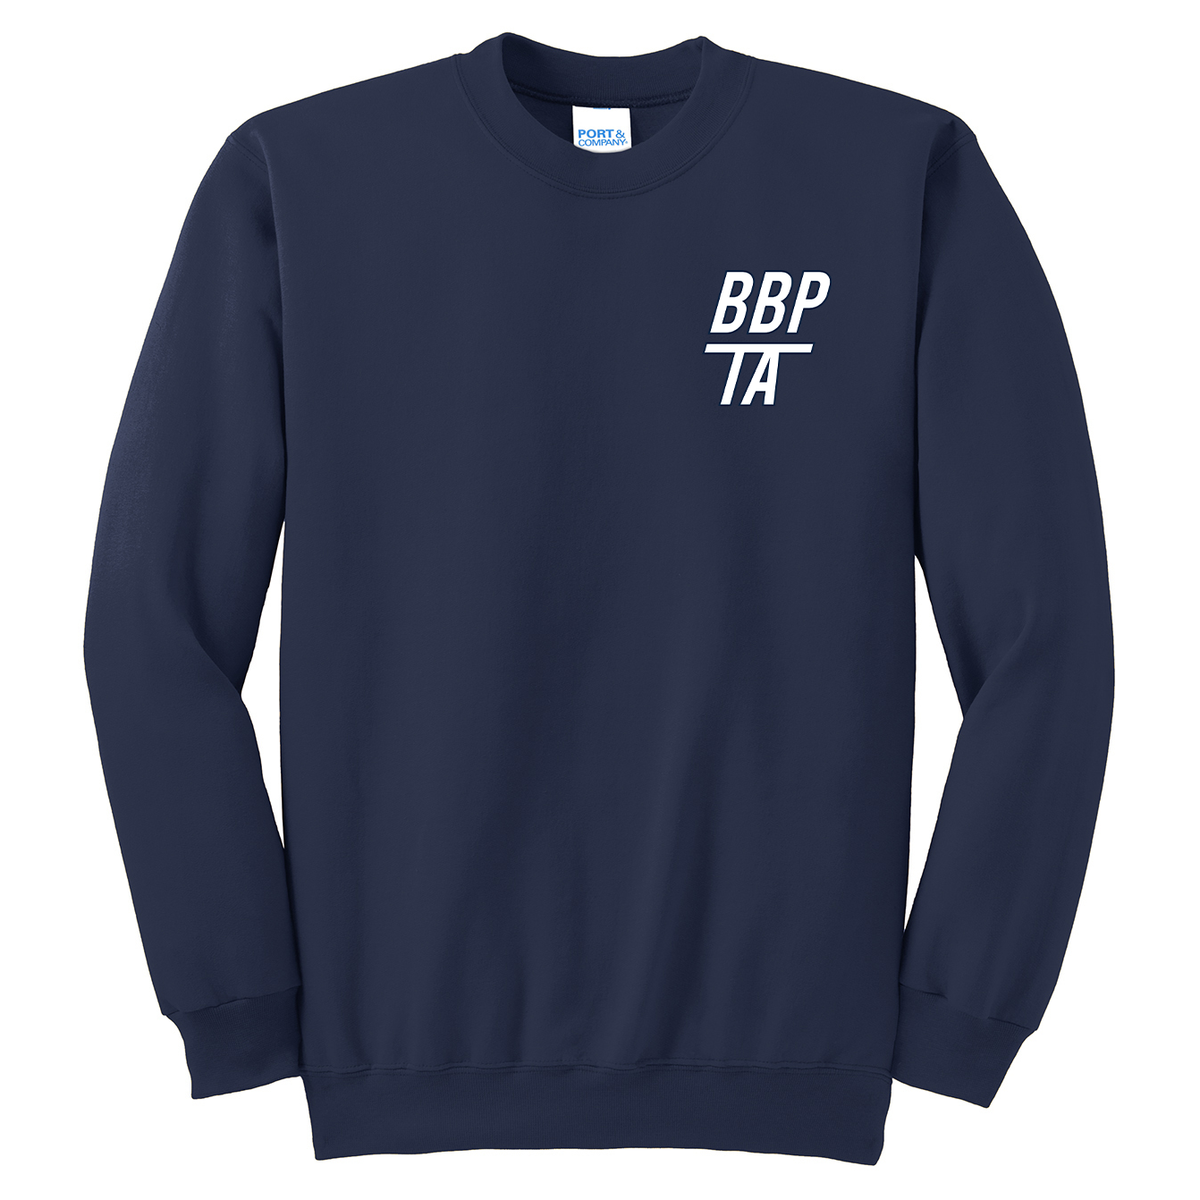 BBP TA Crew Neck Sweater